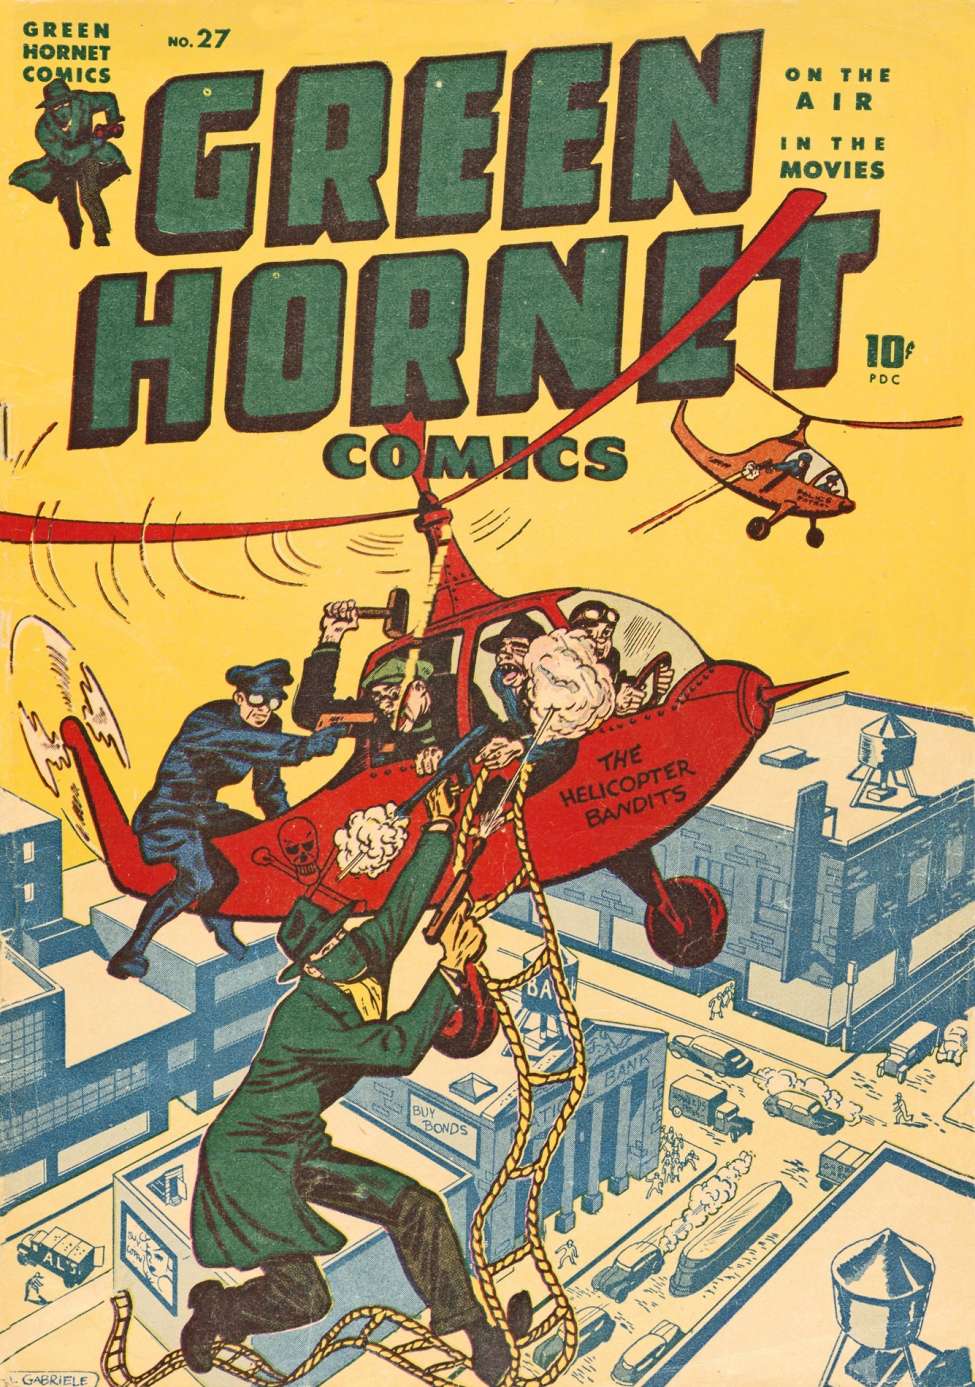 Book Cover For Green Hornet Comics 27 - Version 2